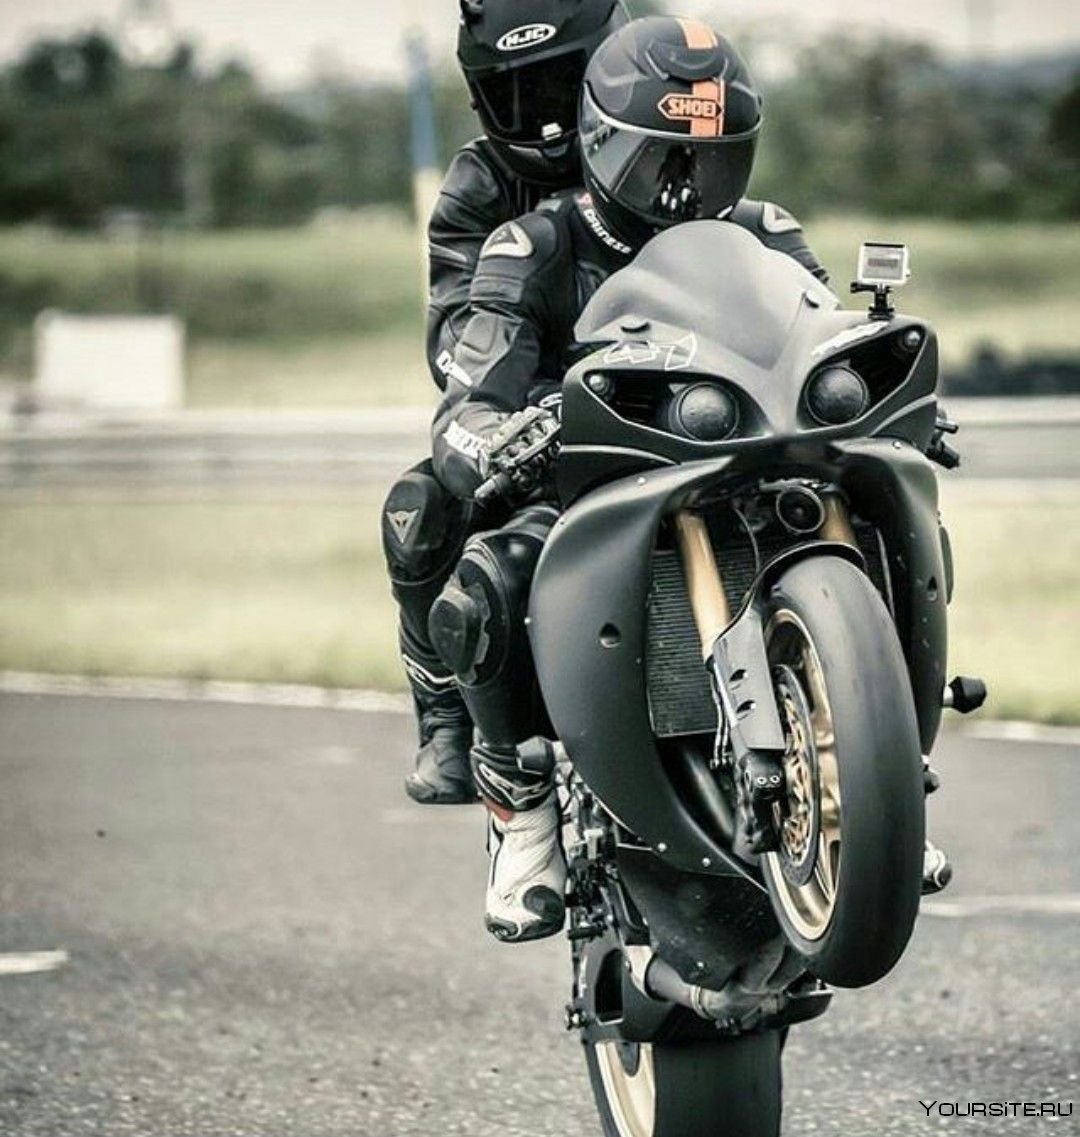 Селфи мотоциклетной шлеме